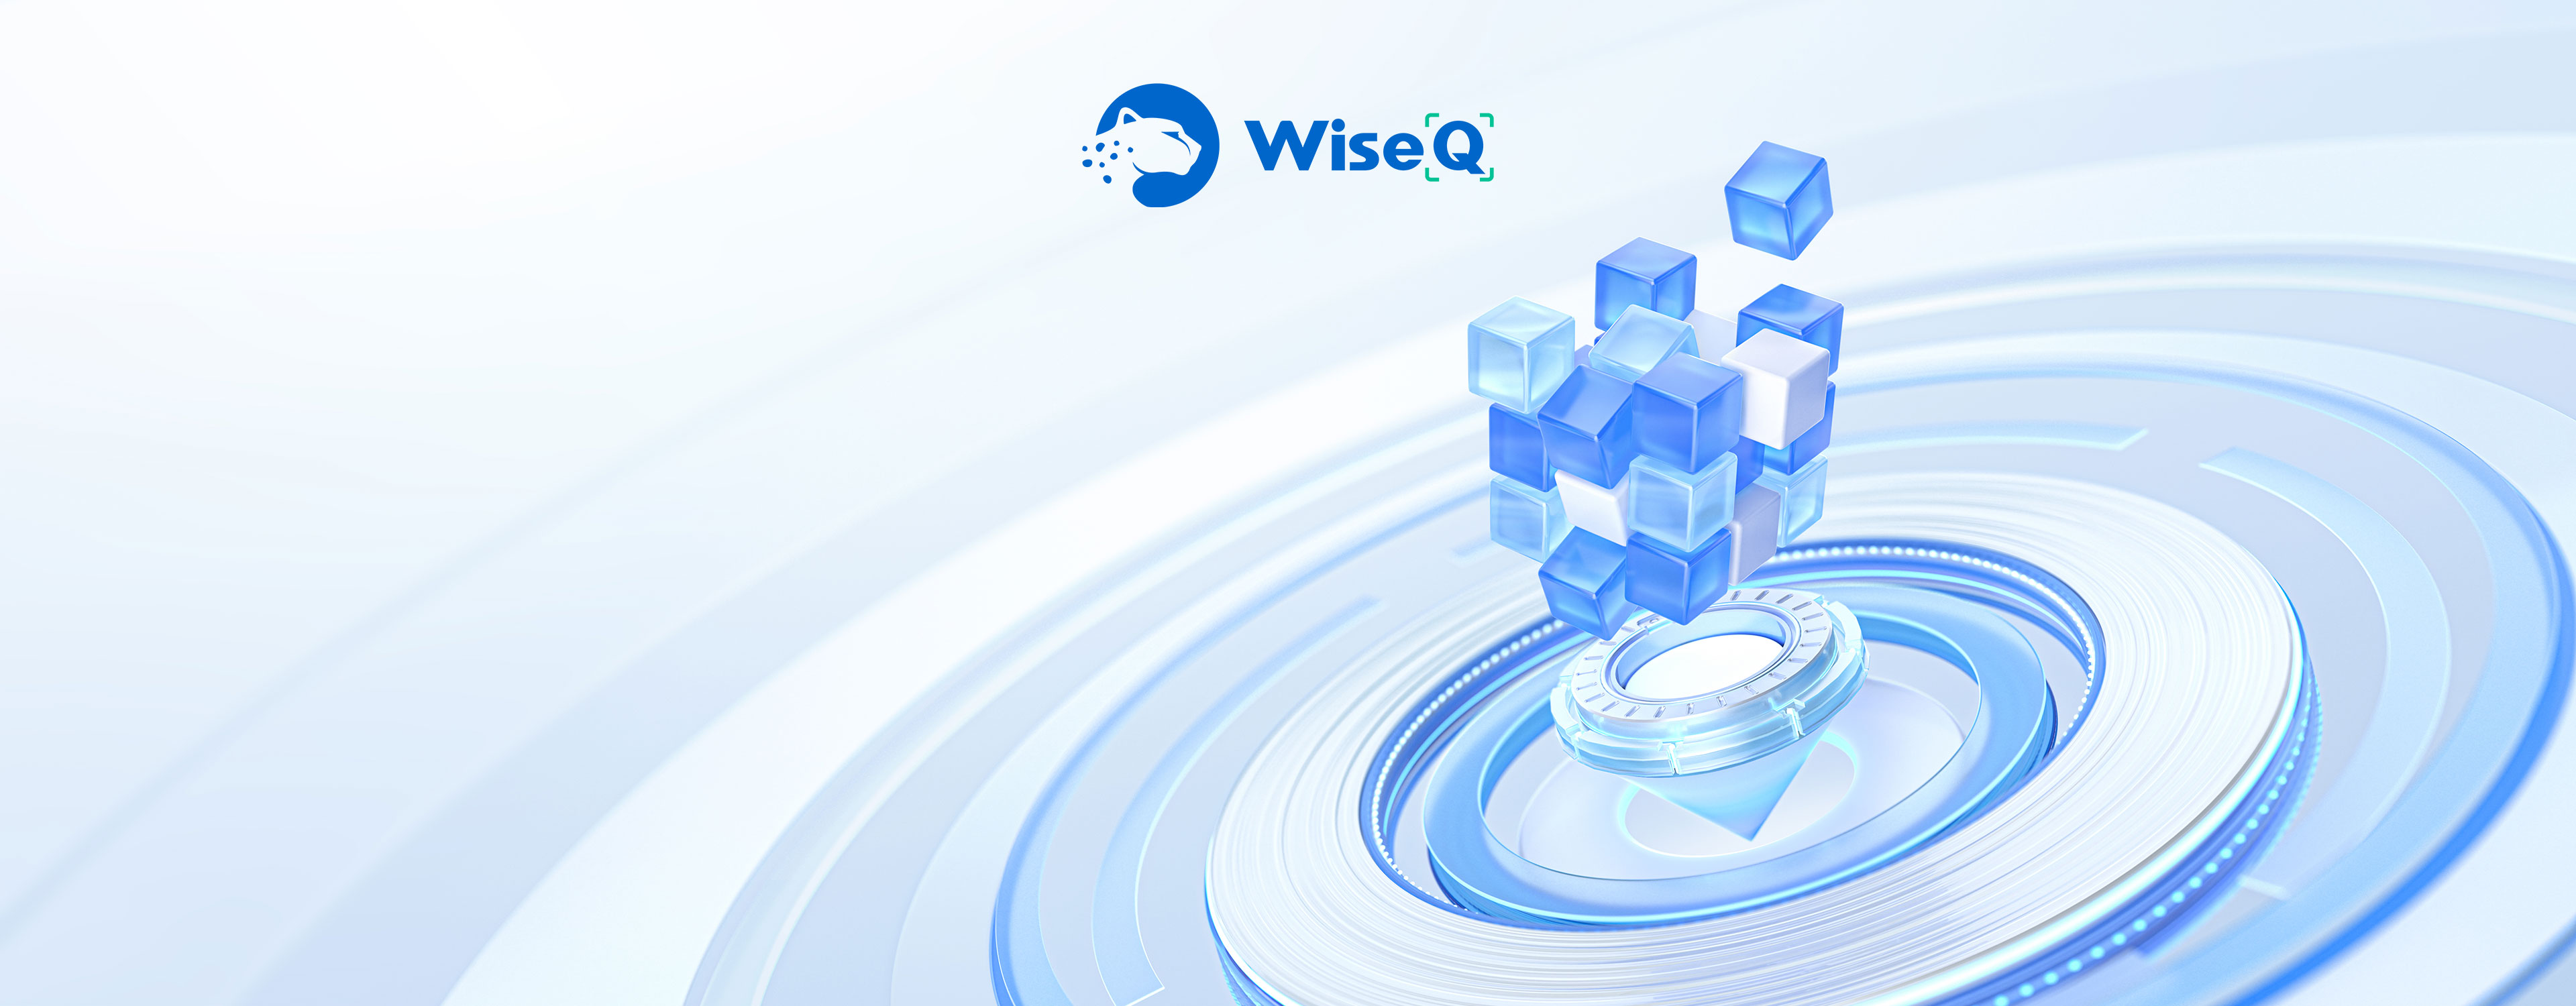 WiseQ - QRコード決済ソリューション